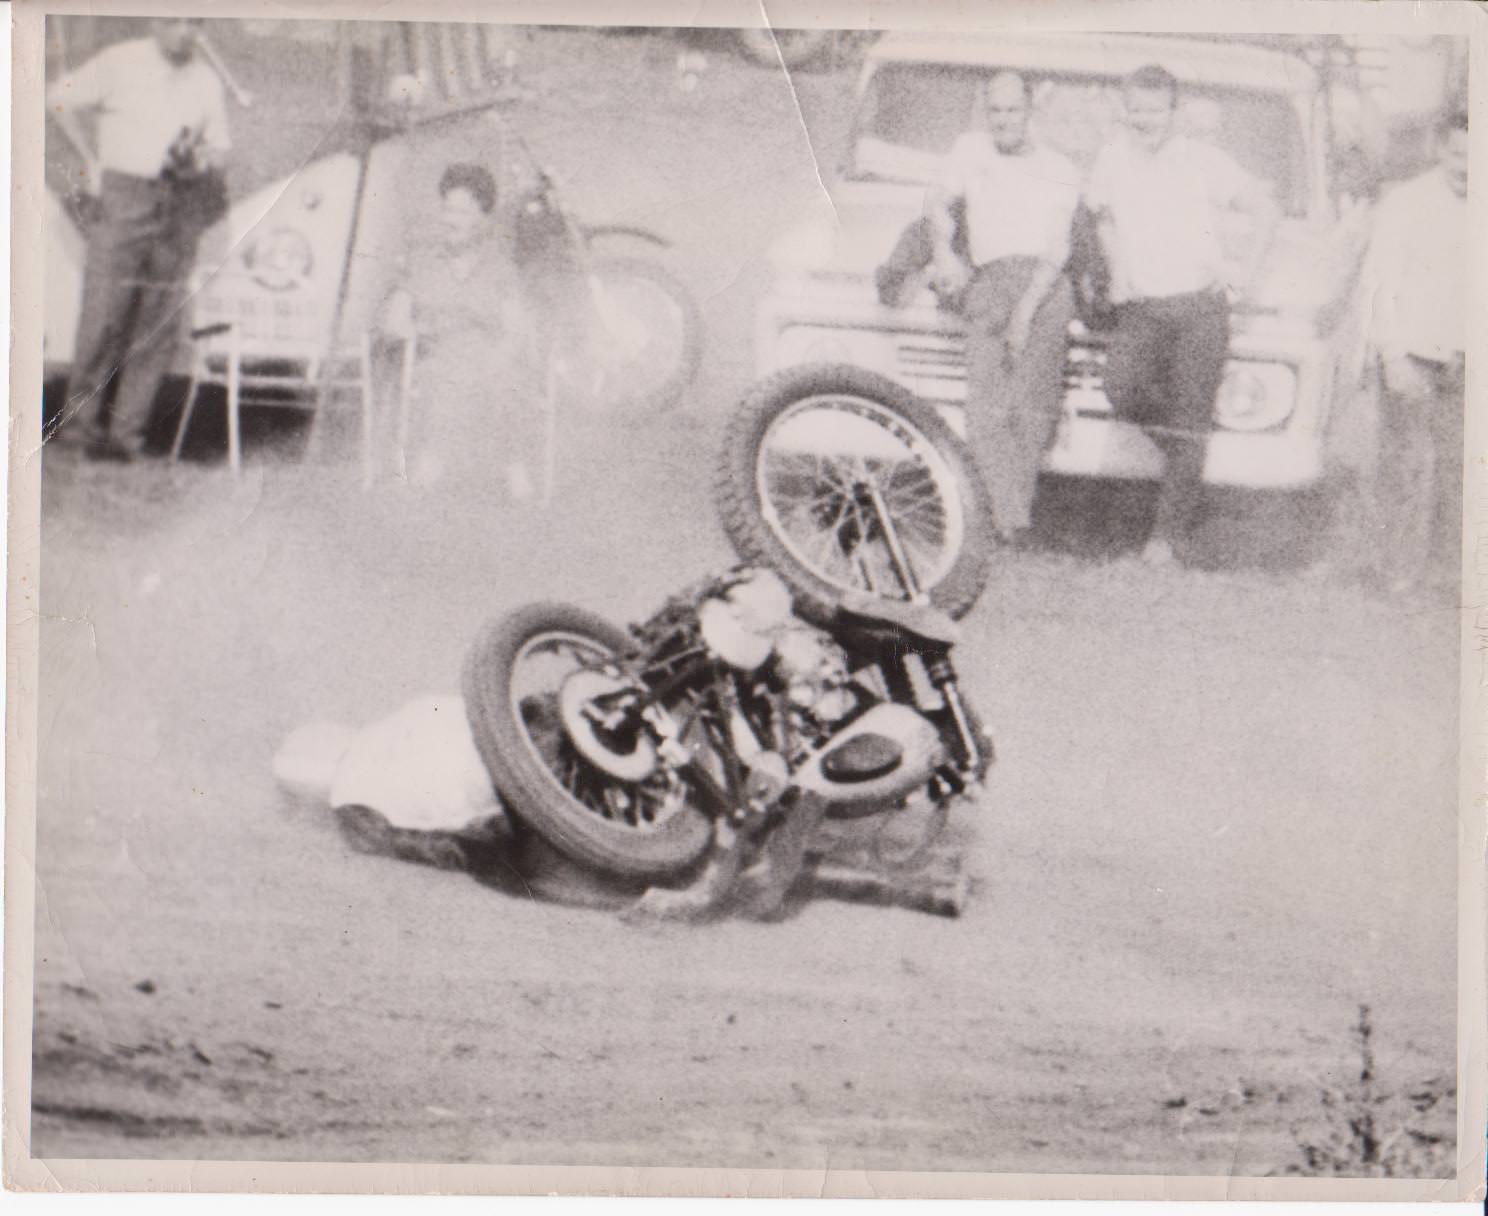 Vintage Motorcyle Racing Photos